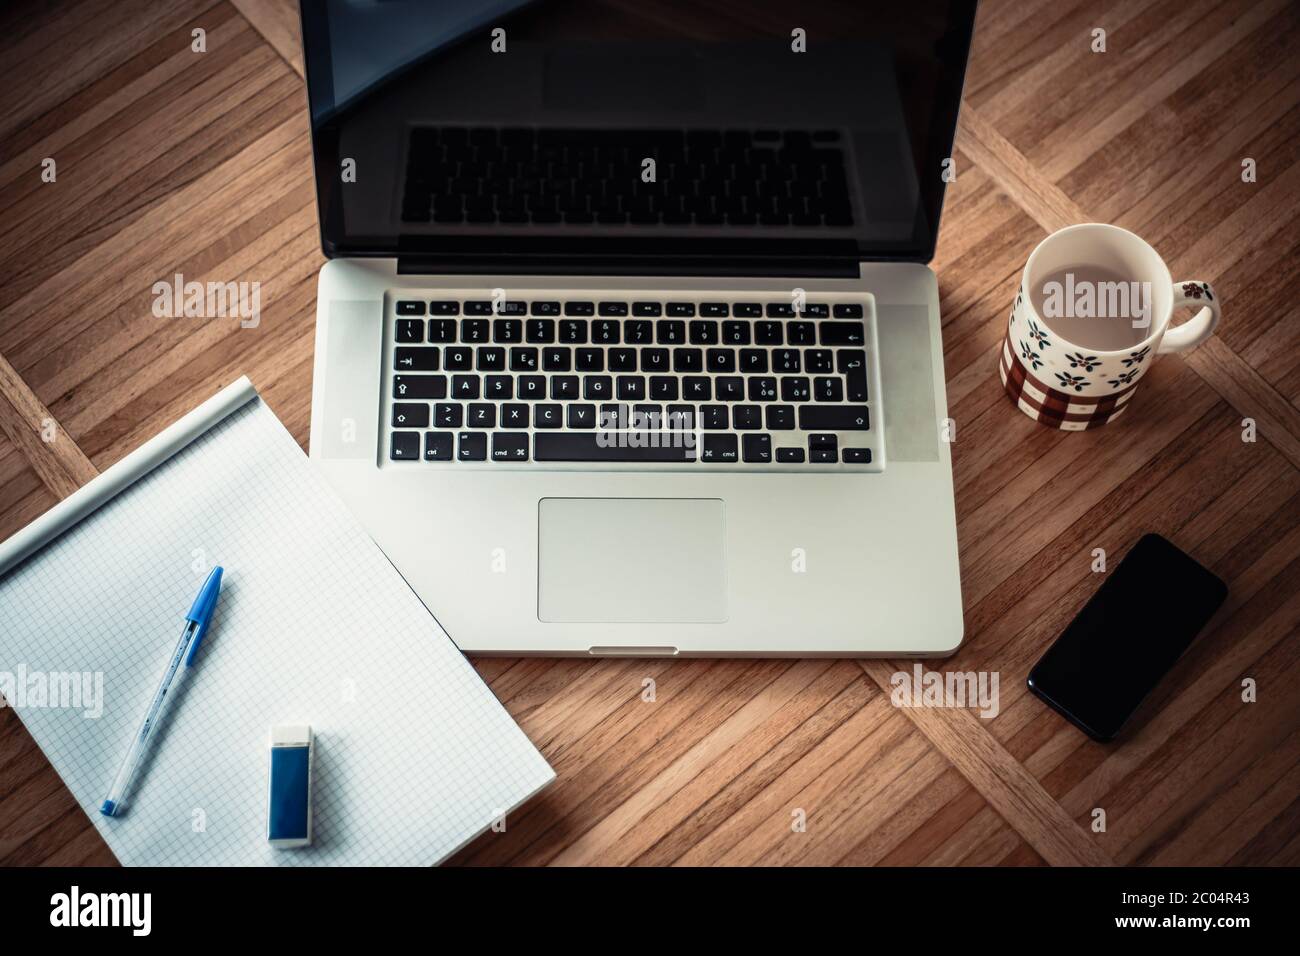 Working Desktop Concept for Smart Working Stock Photo